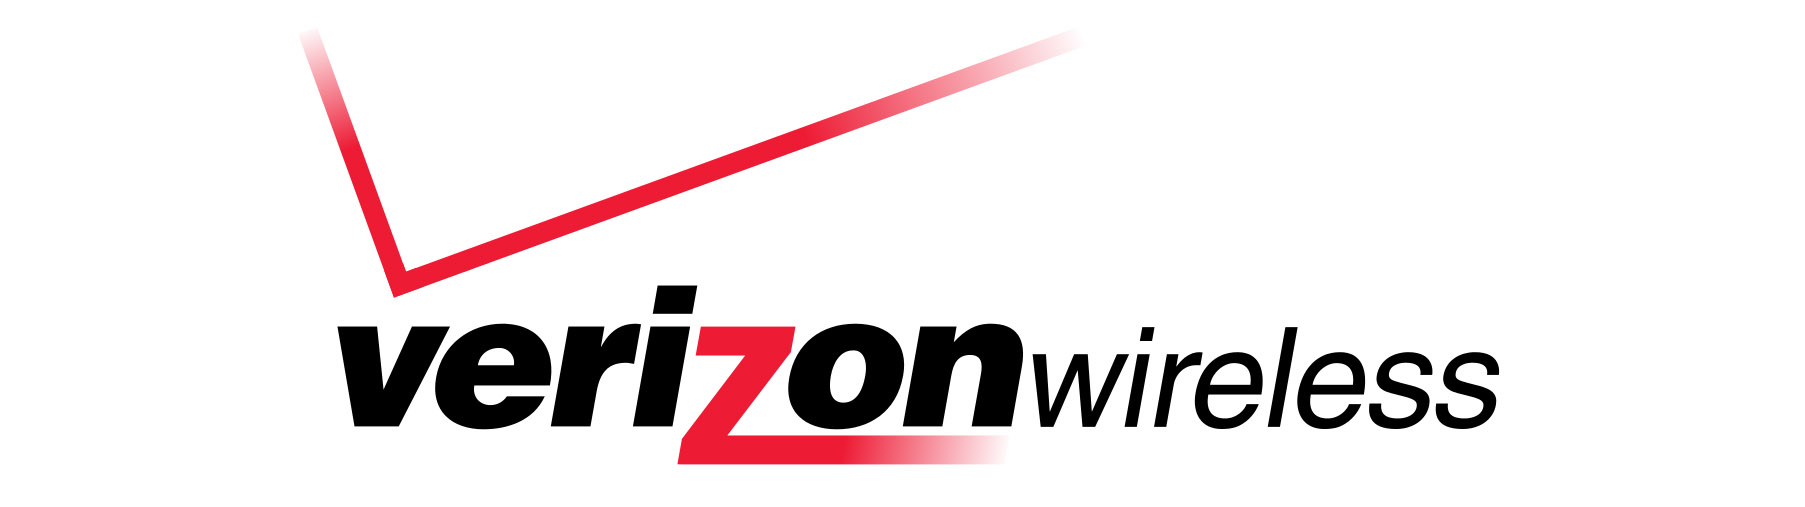 best cell phone providers: Verizon Wireless